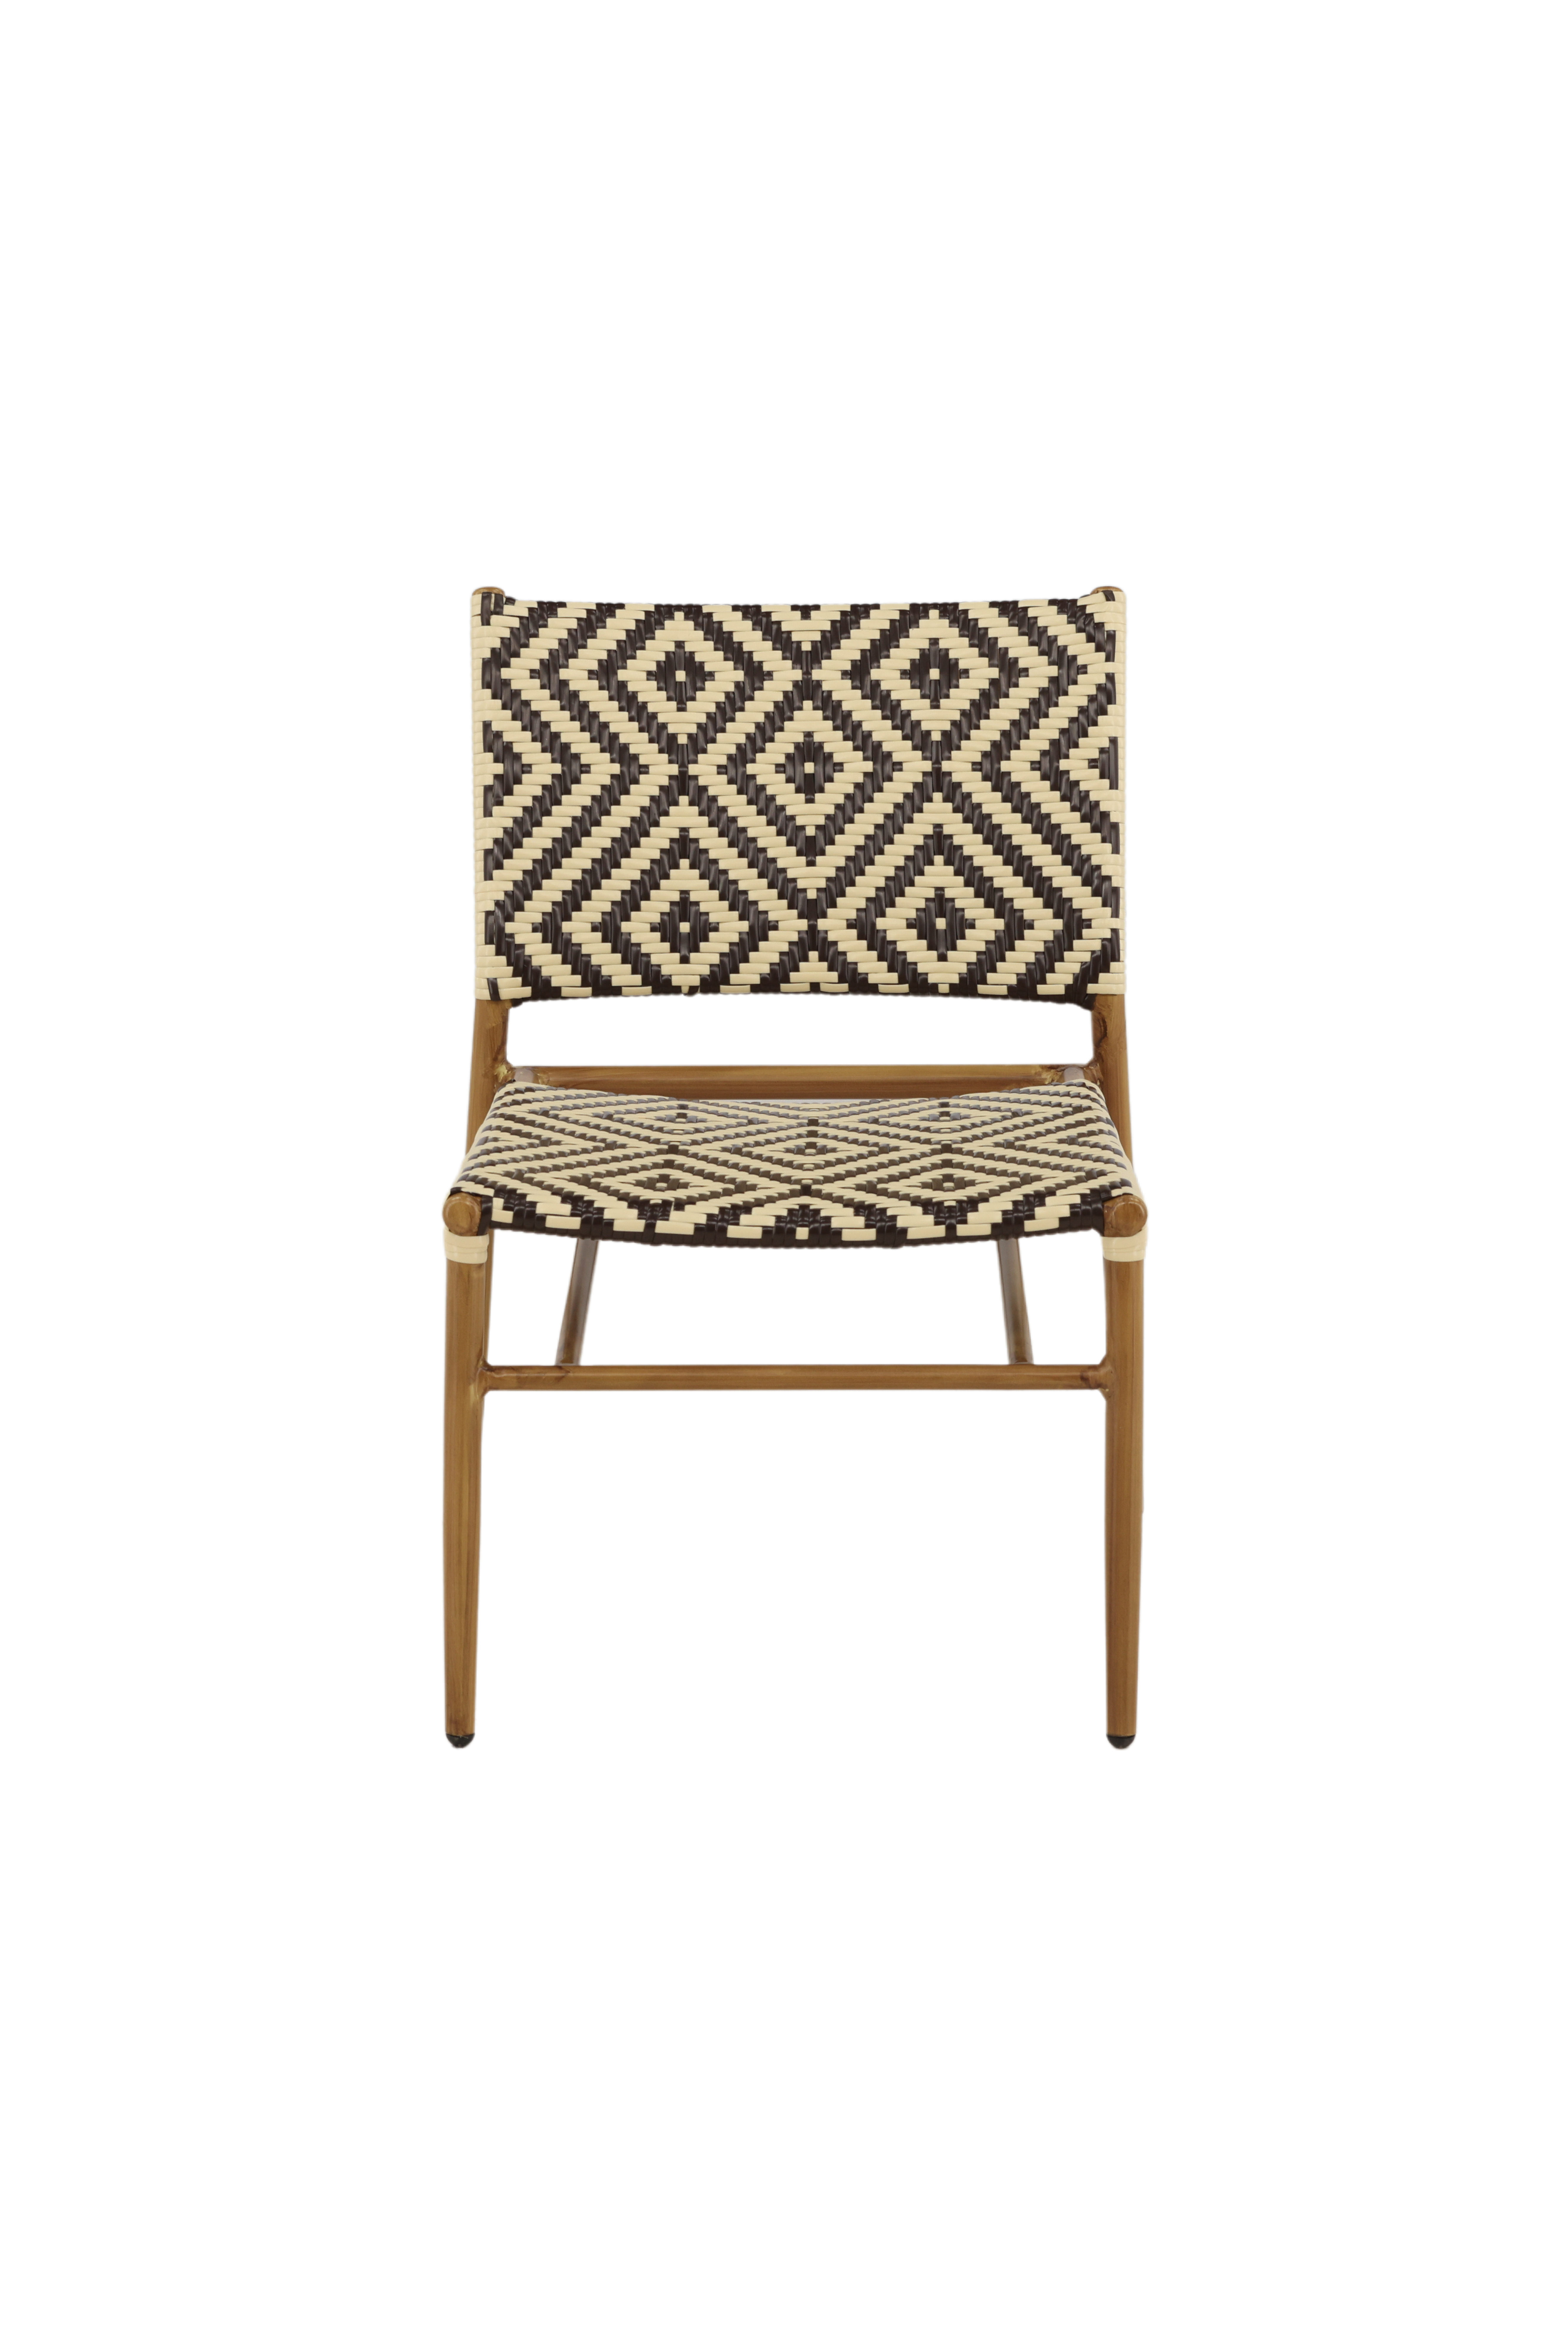 VENTURE DESIGN Calapan udendørs loungestol - beige/brun polyrattan og natur aluminium